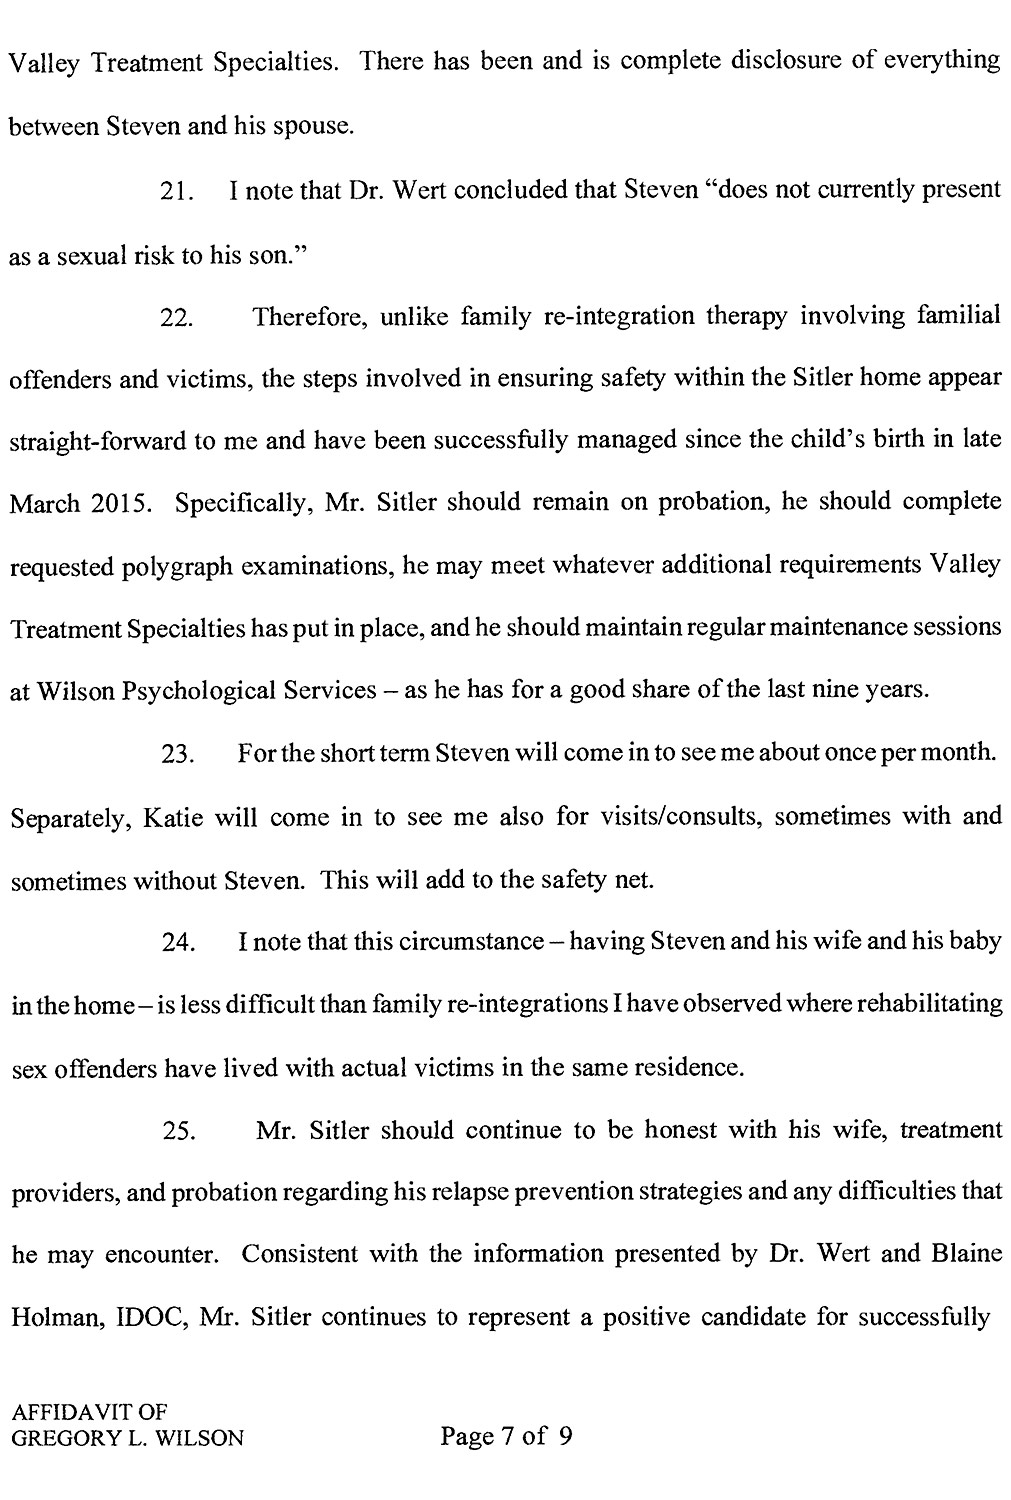 Affidavit of Gregory L. Wilson page 7